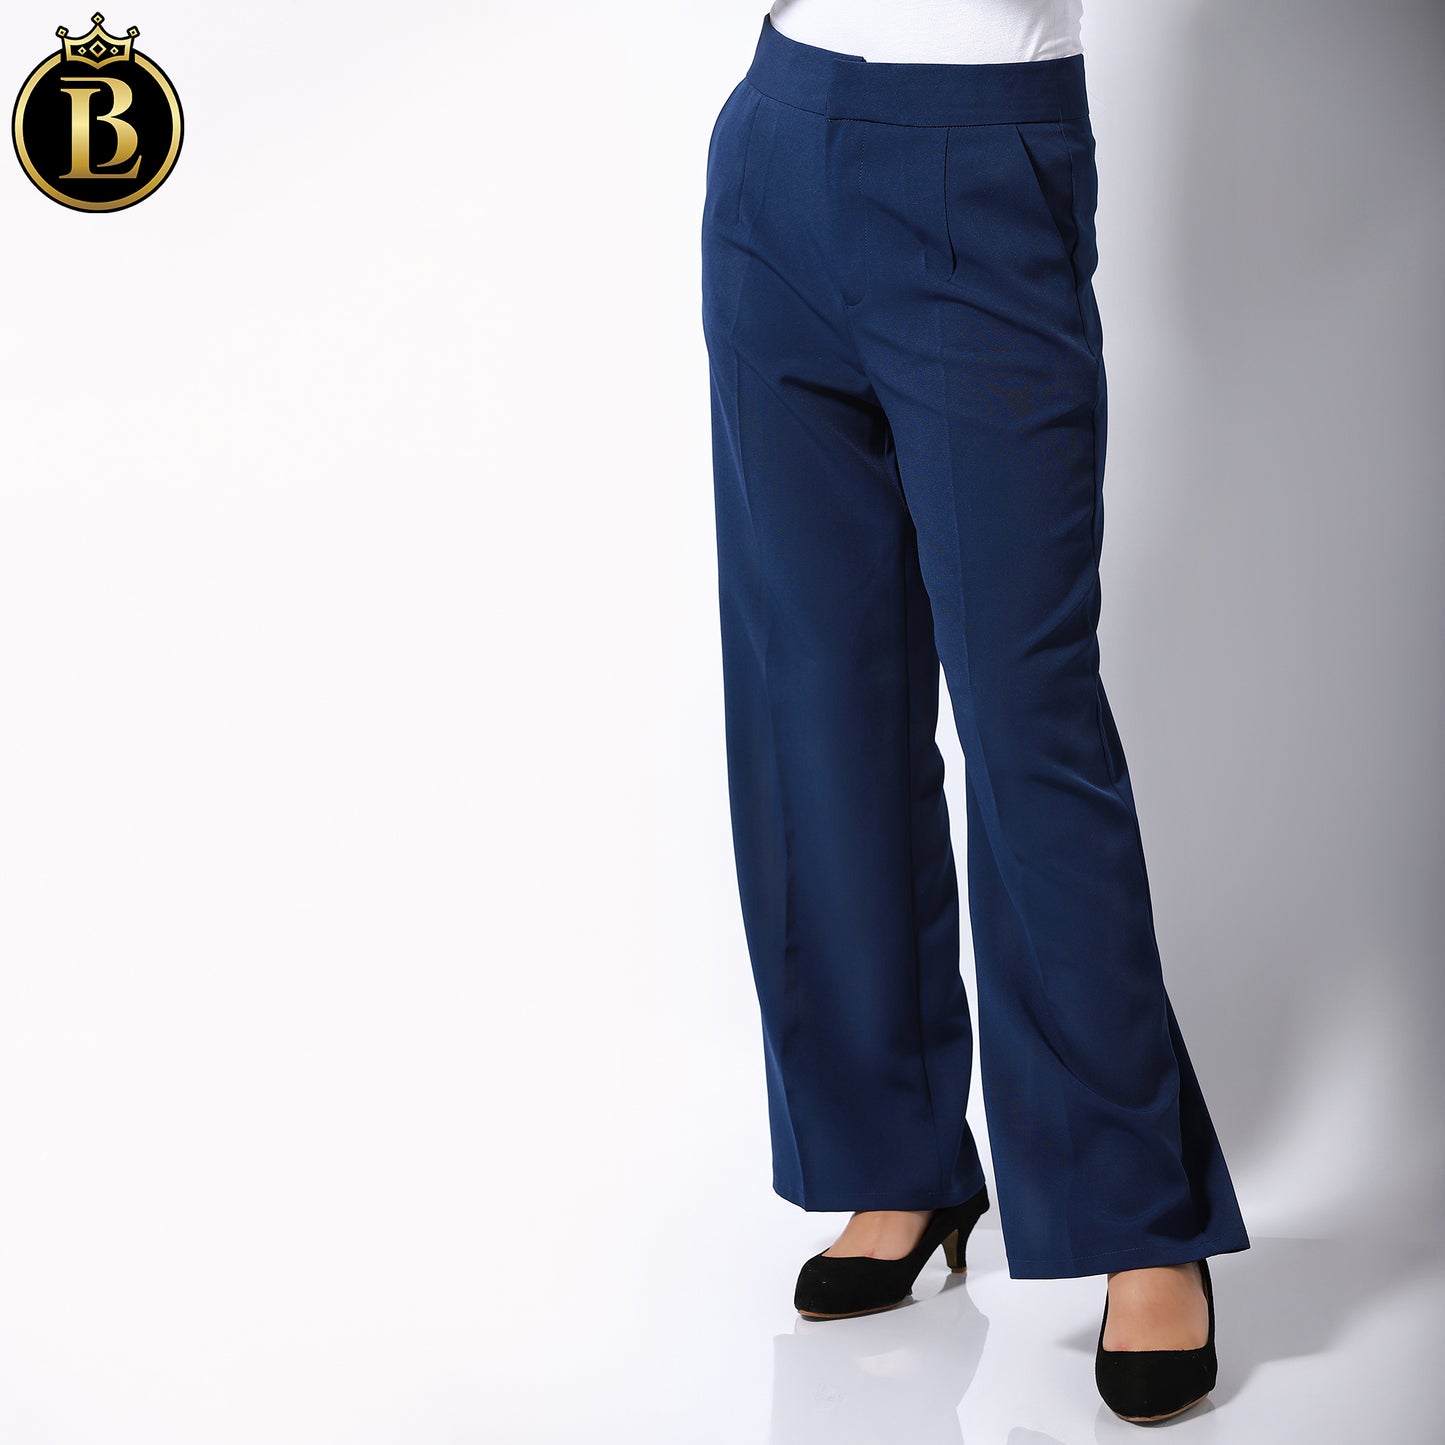 Blue High-Rise Slim Fit Cotton Formal Pant